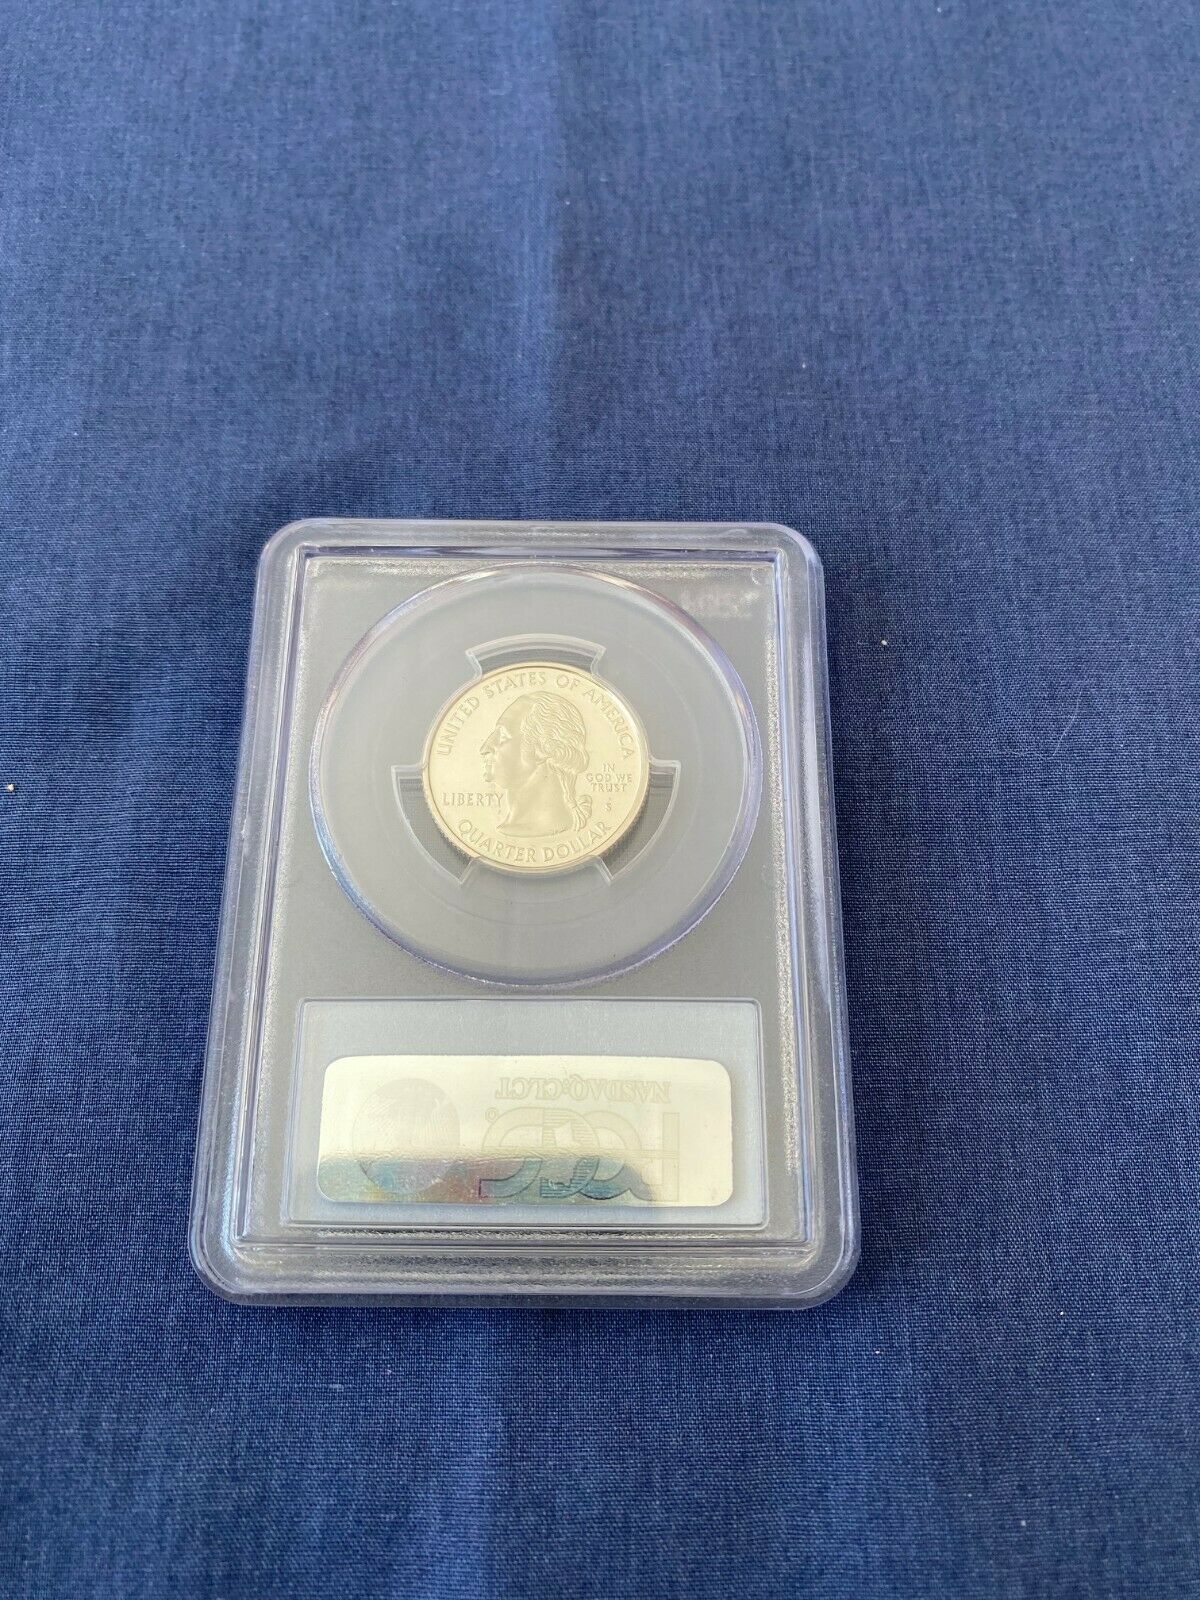 2005-S PCGS PR70DCAM California Quarter – Stunning Coin